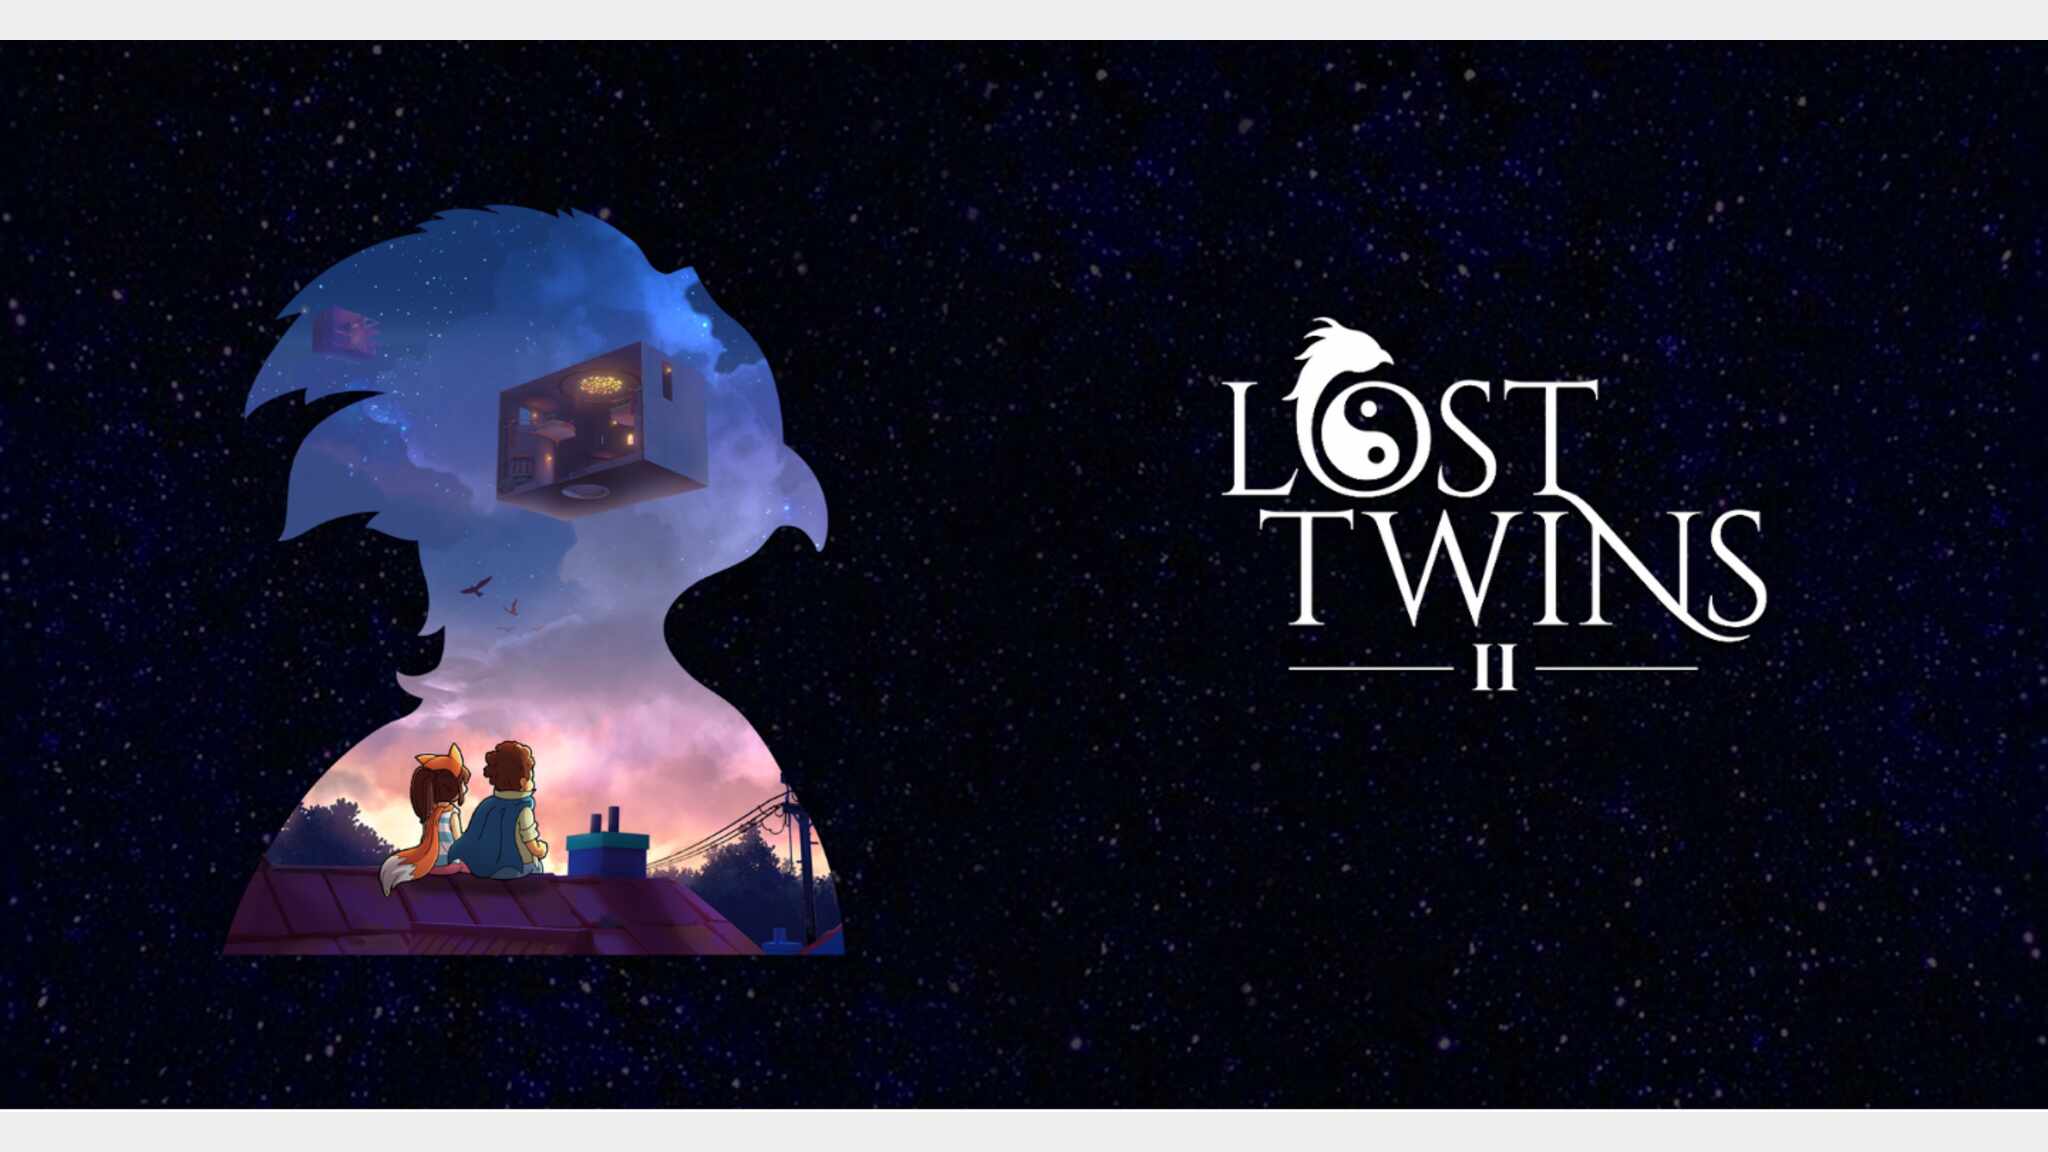 Lost twins 2